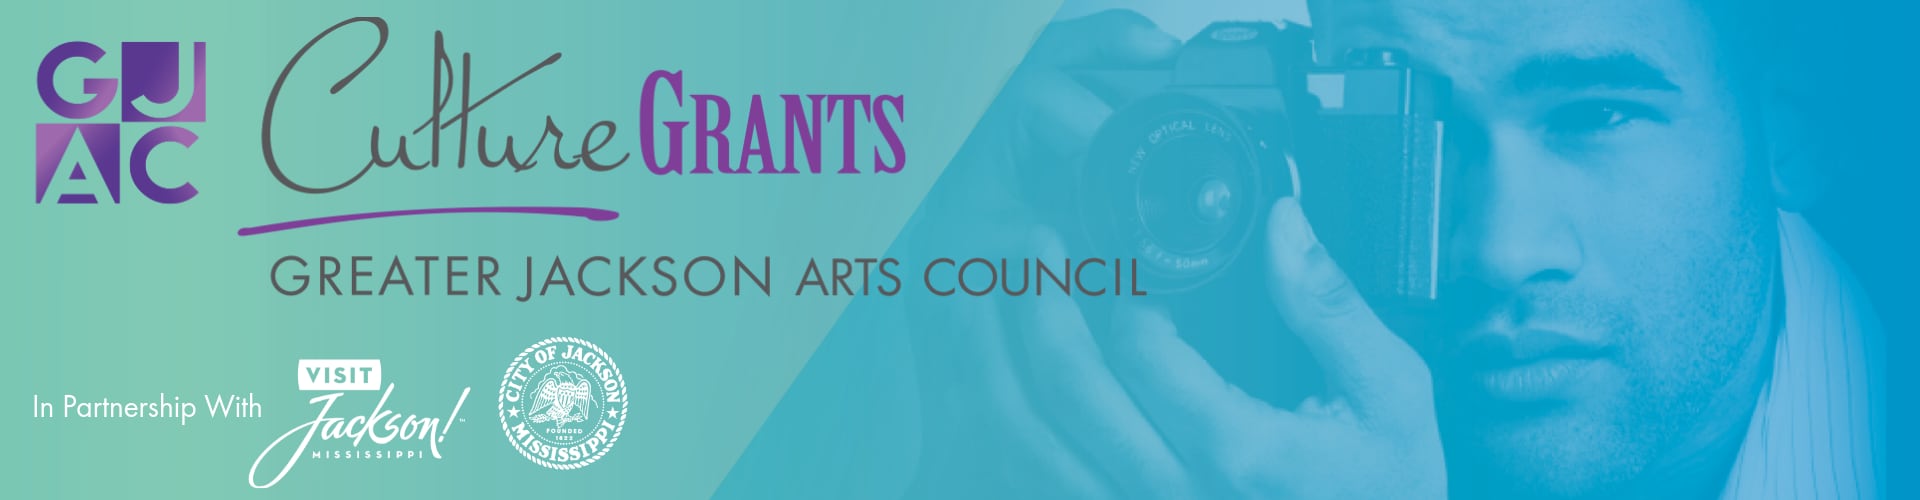 Greater Jackson Arts Council